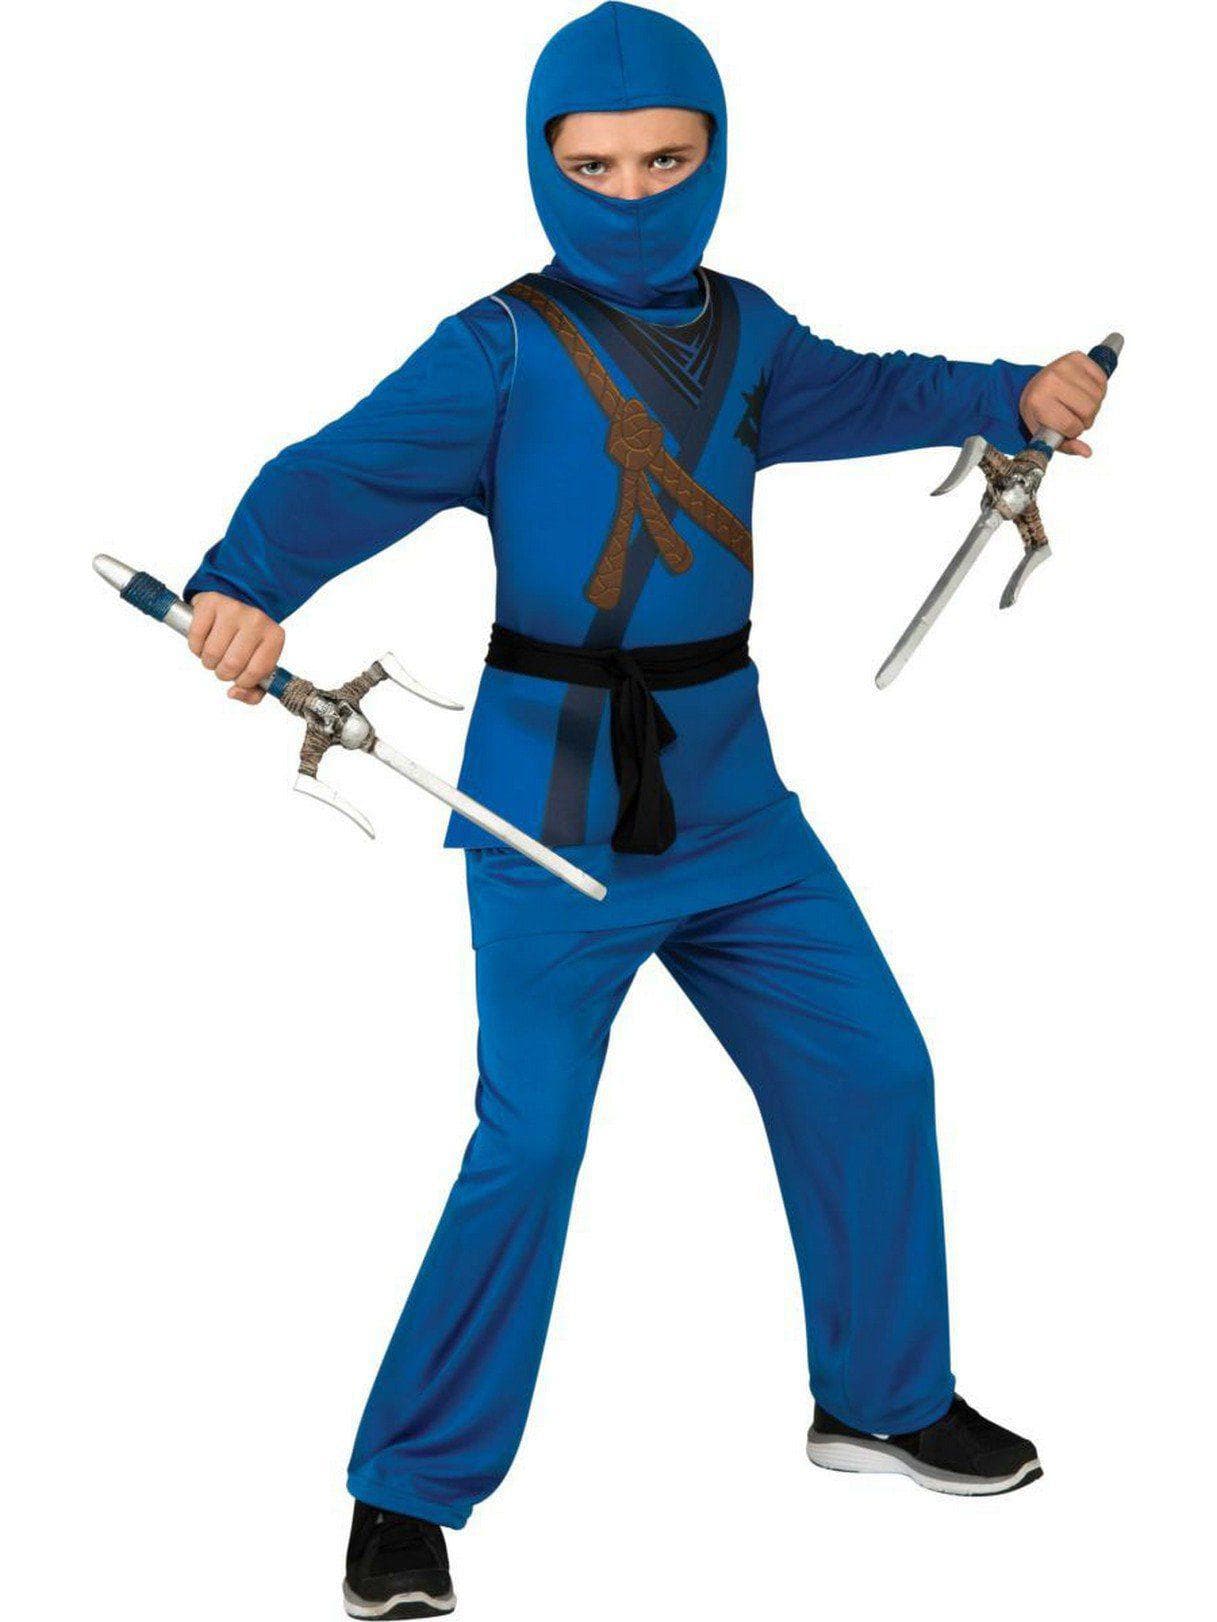 Kids' Blue Ninja Costume - costumes.com